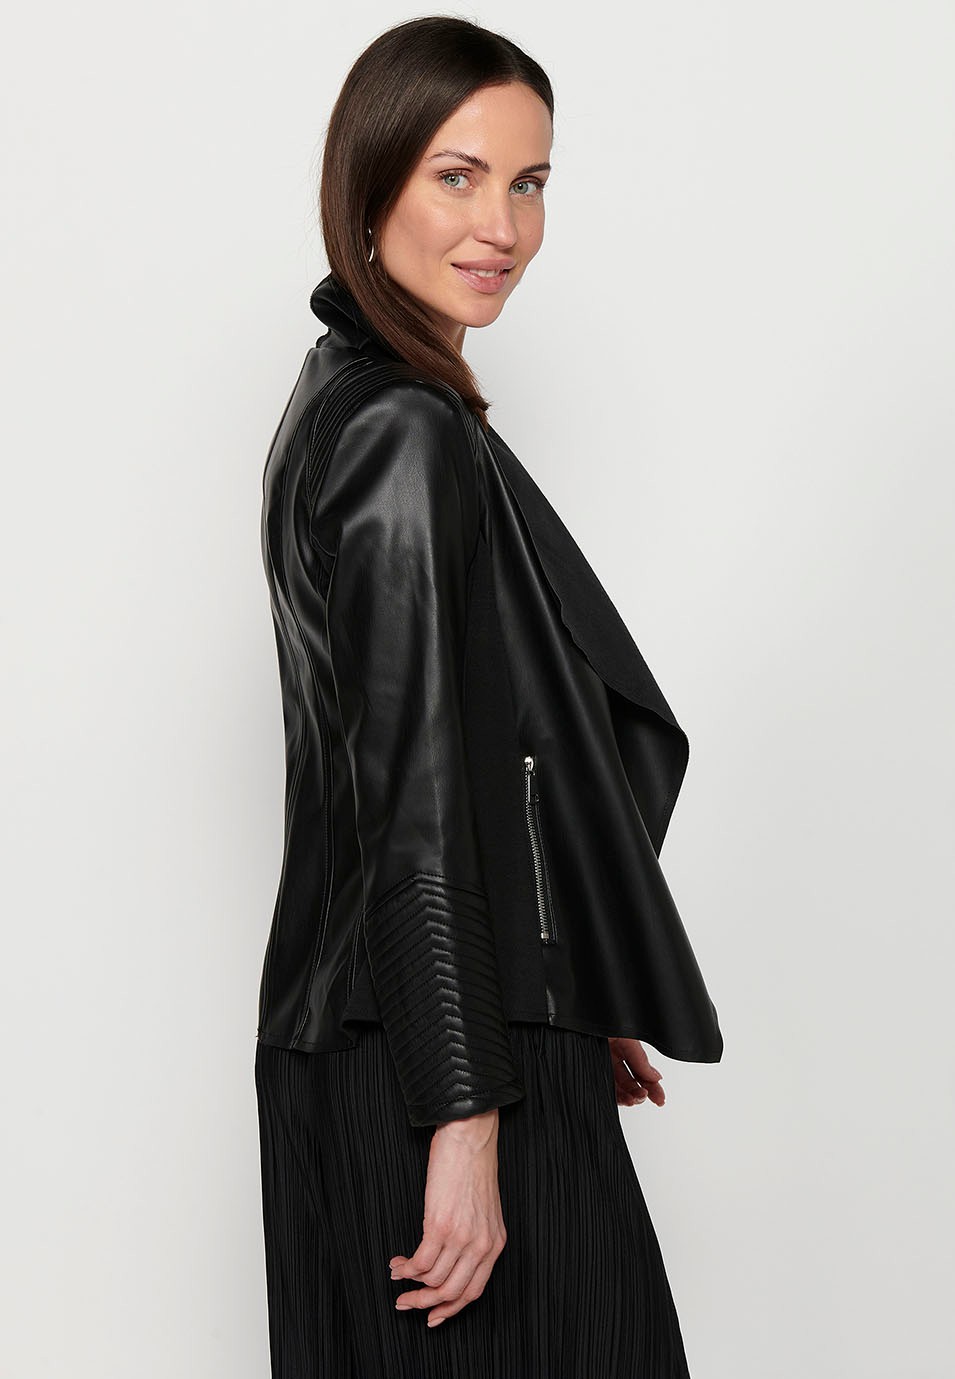 Long Sleeve Jacket, Asymmetrical Finish, Black Color for Women